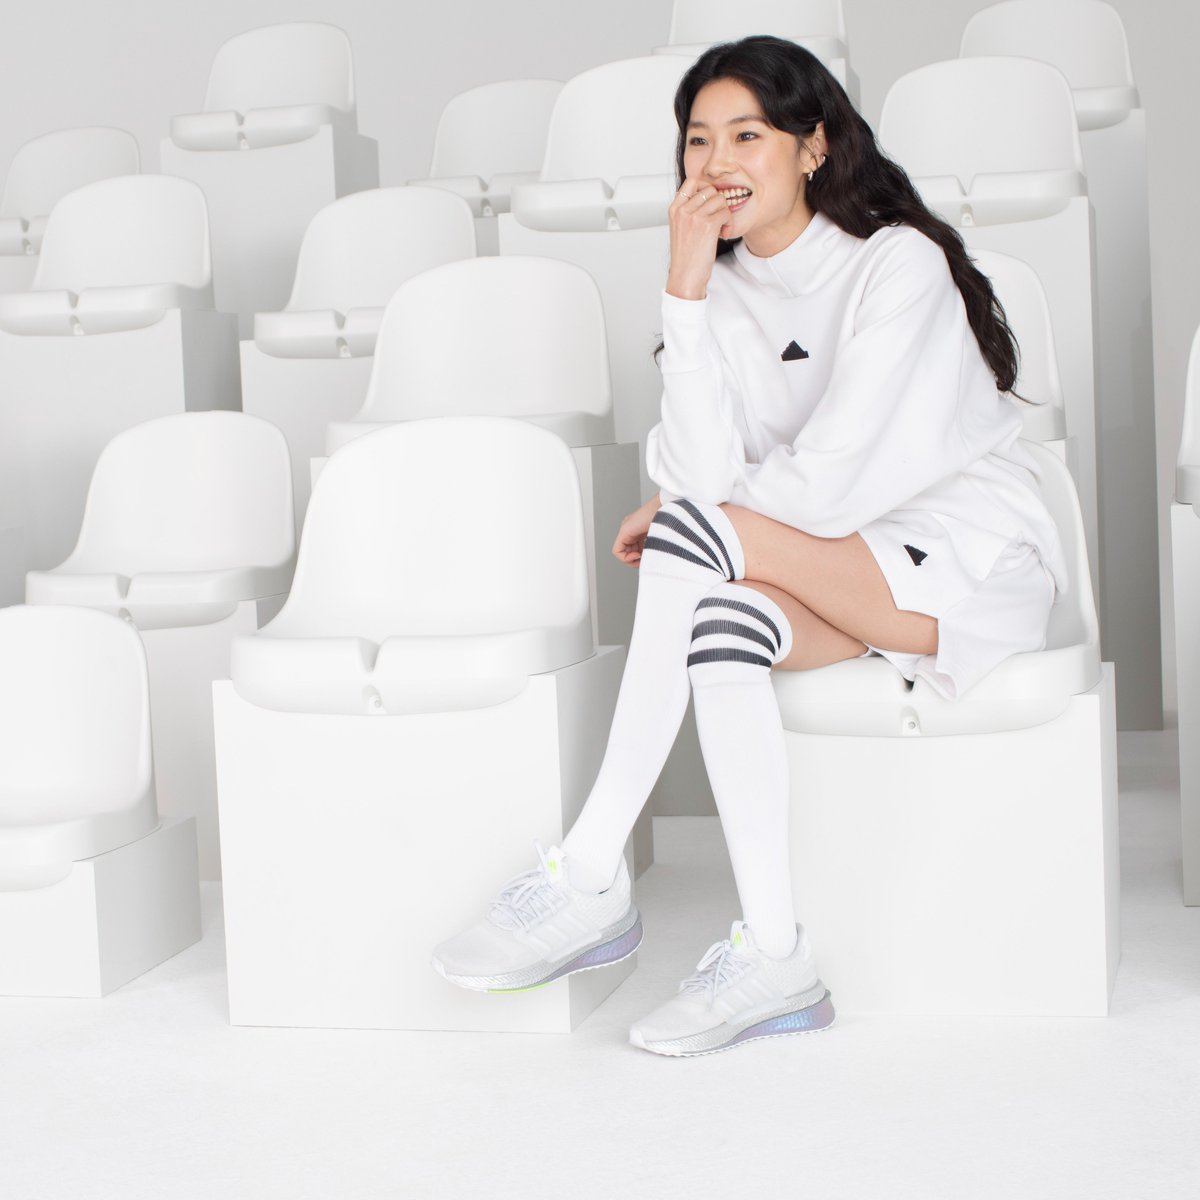 adidaskorea tweet picture